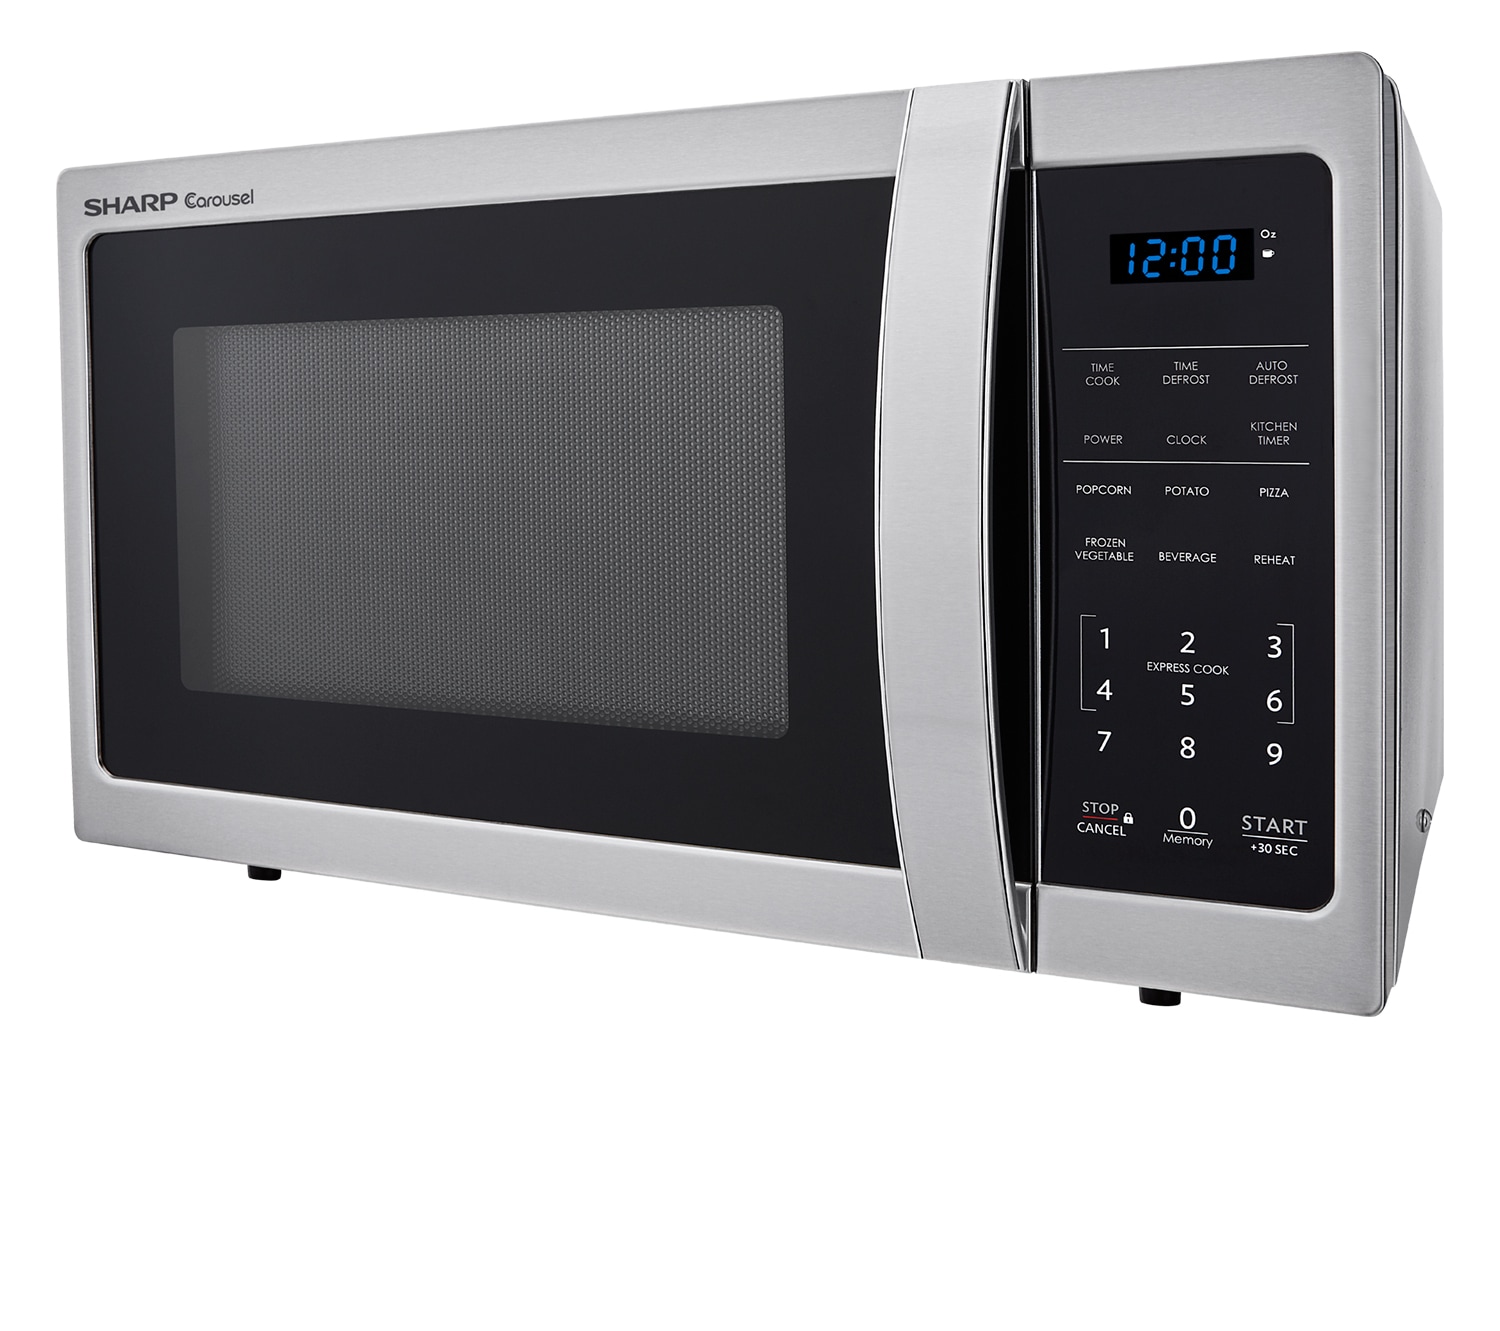 Buy Sharp Trim Kits & Sharp Microwave Oven Accessories